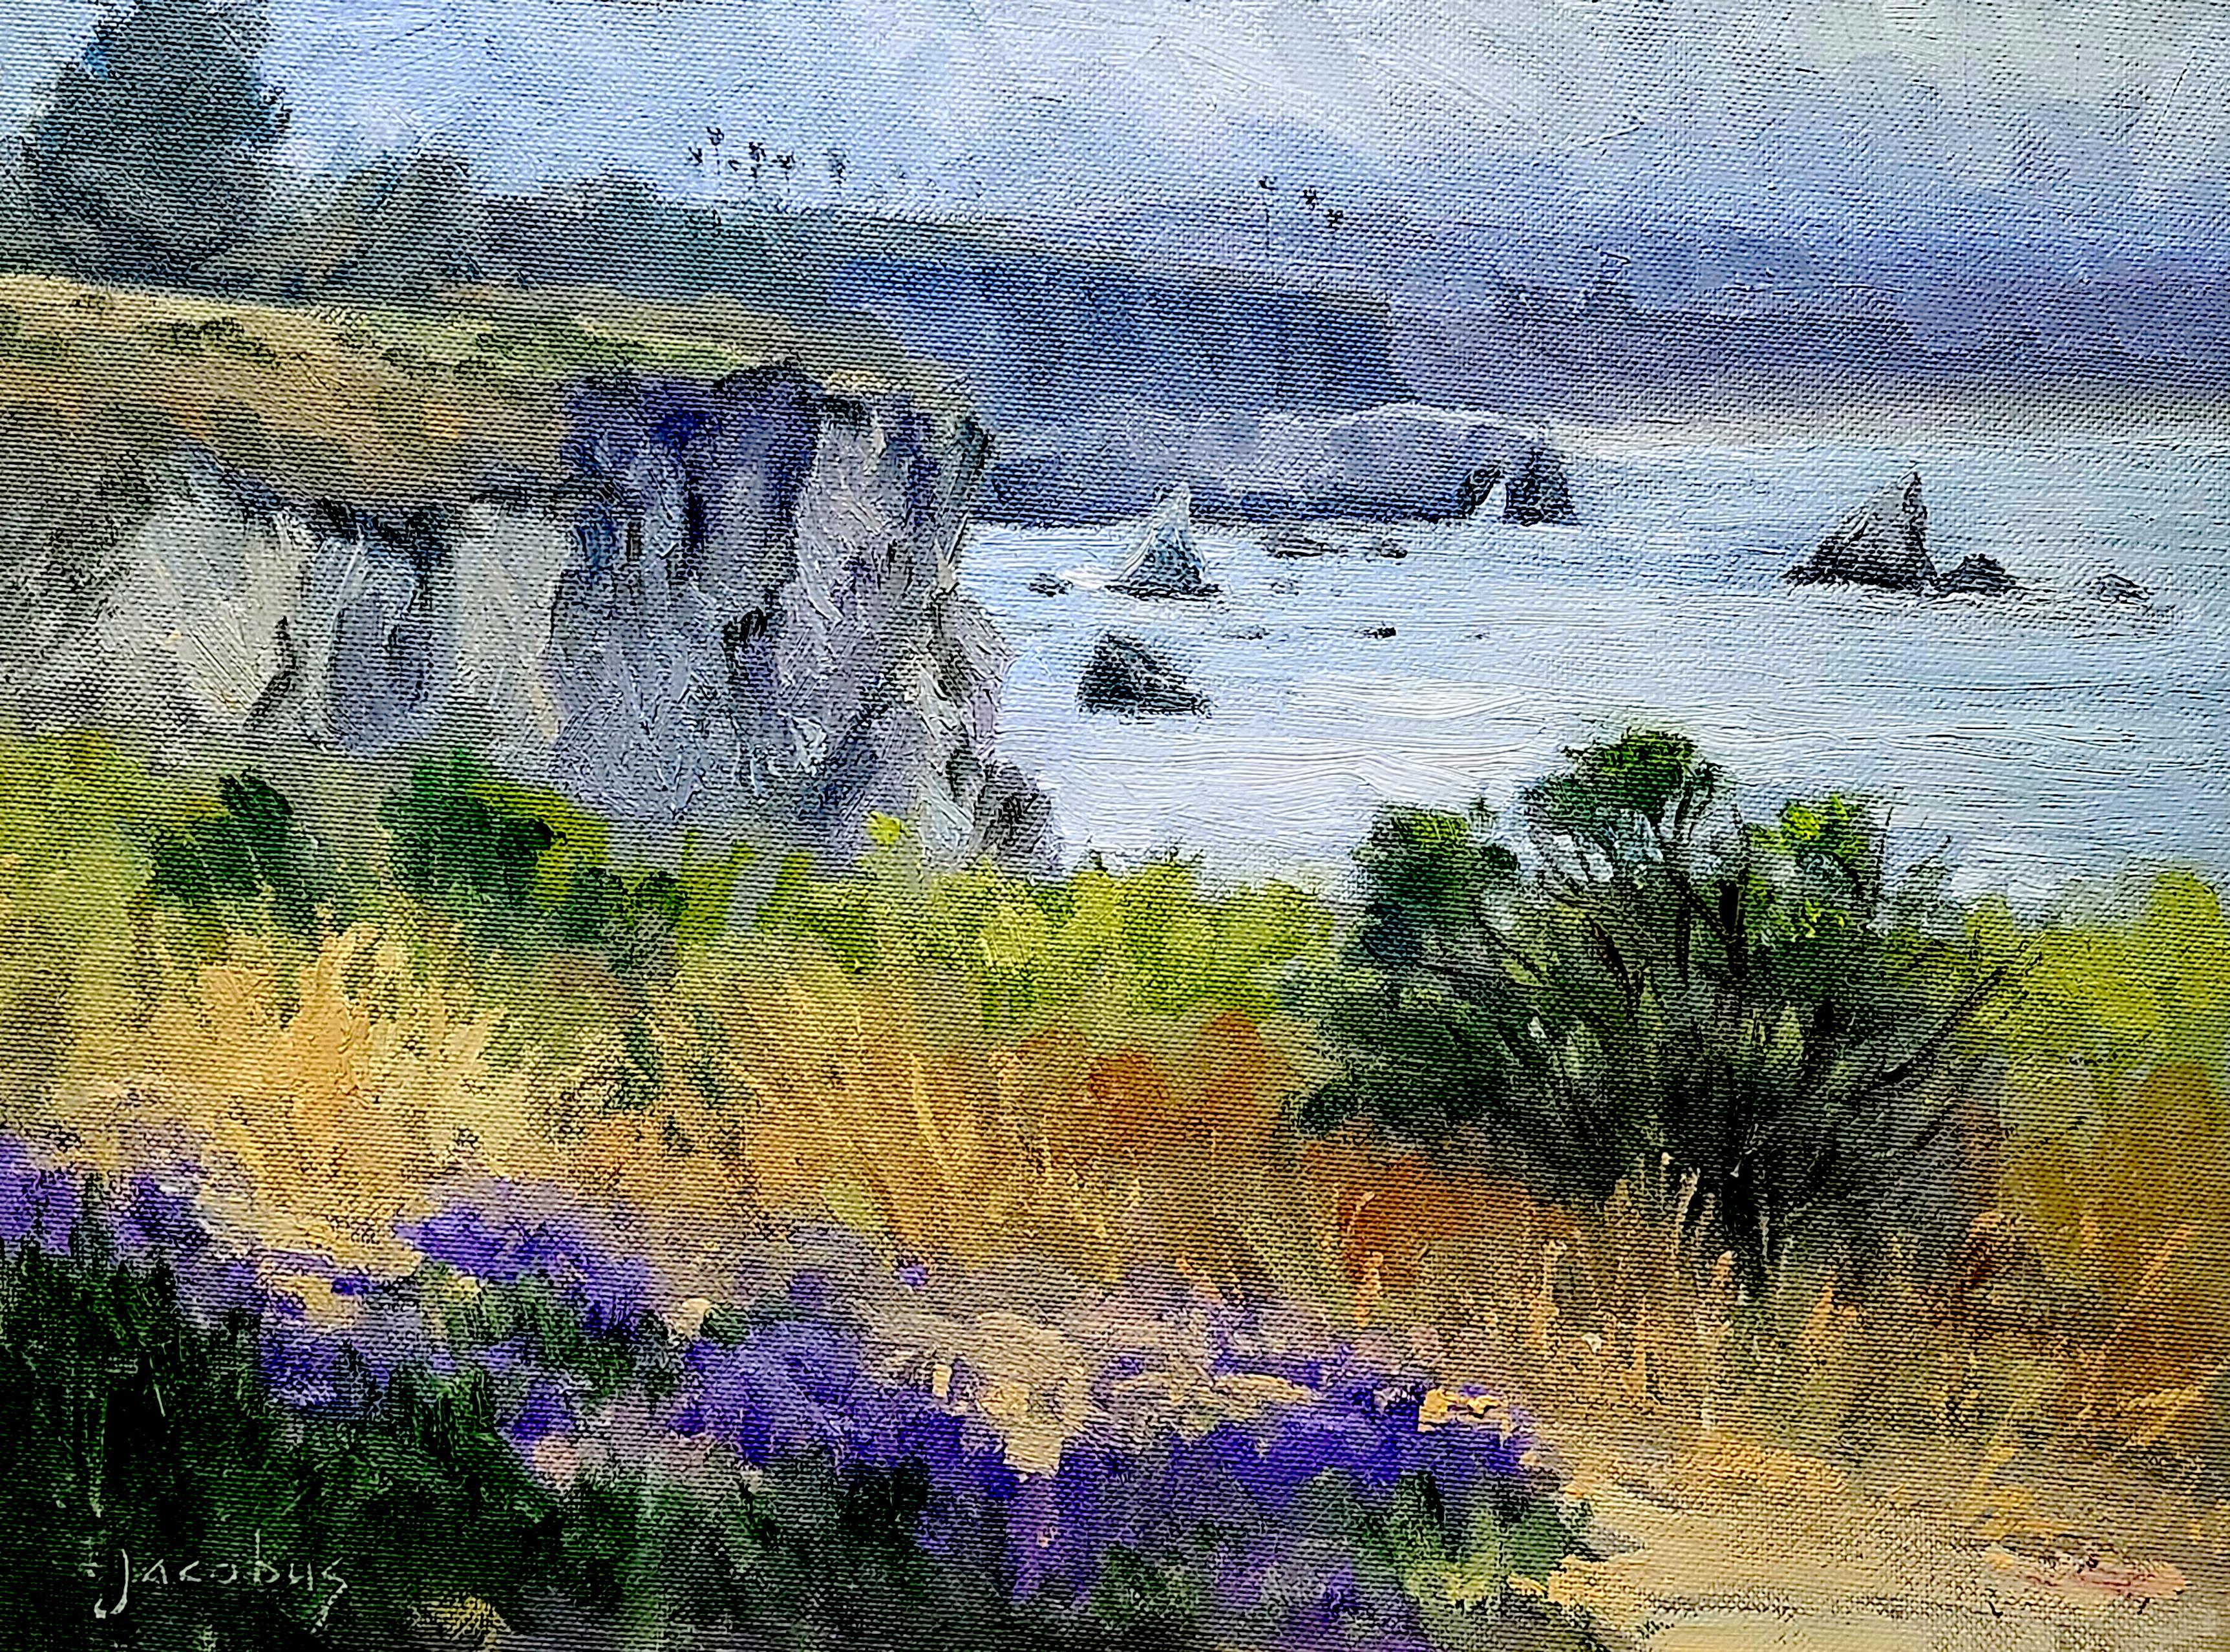 Jacobus Baas Landscape Painting - "Foggy Day, Pismo Beach" Central California Coastal Scene